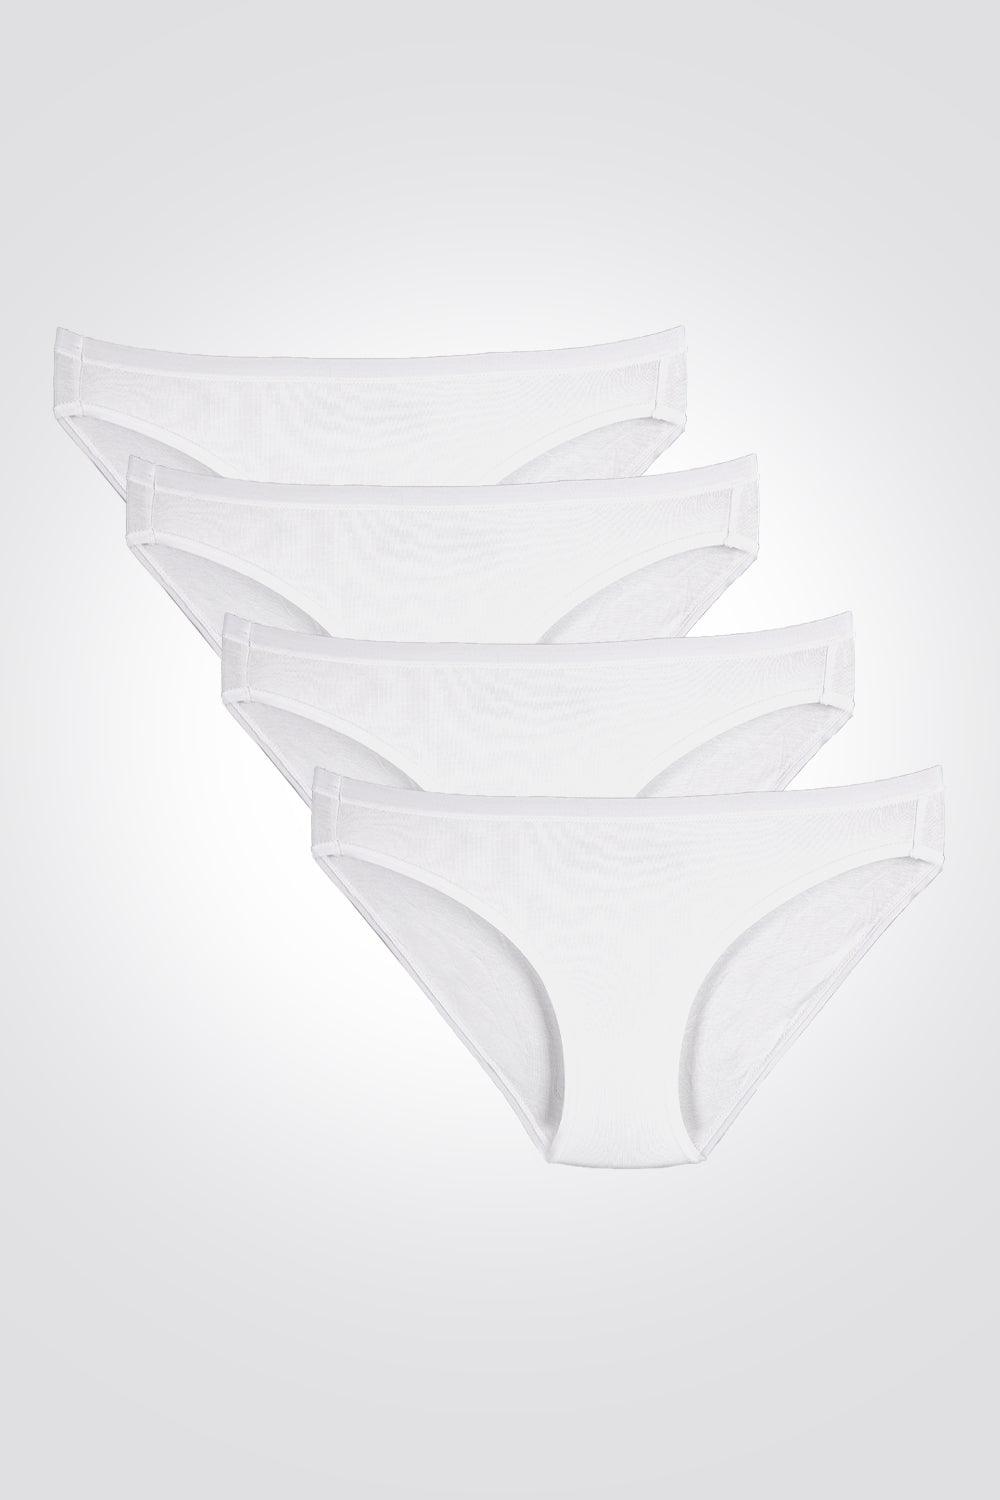 DELTA - מארז 4 תחתוני מיני BASIC PACK בצבע לבן - MASHBIR//365